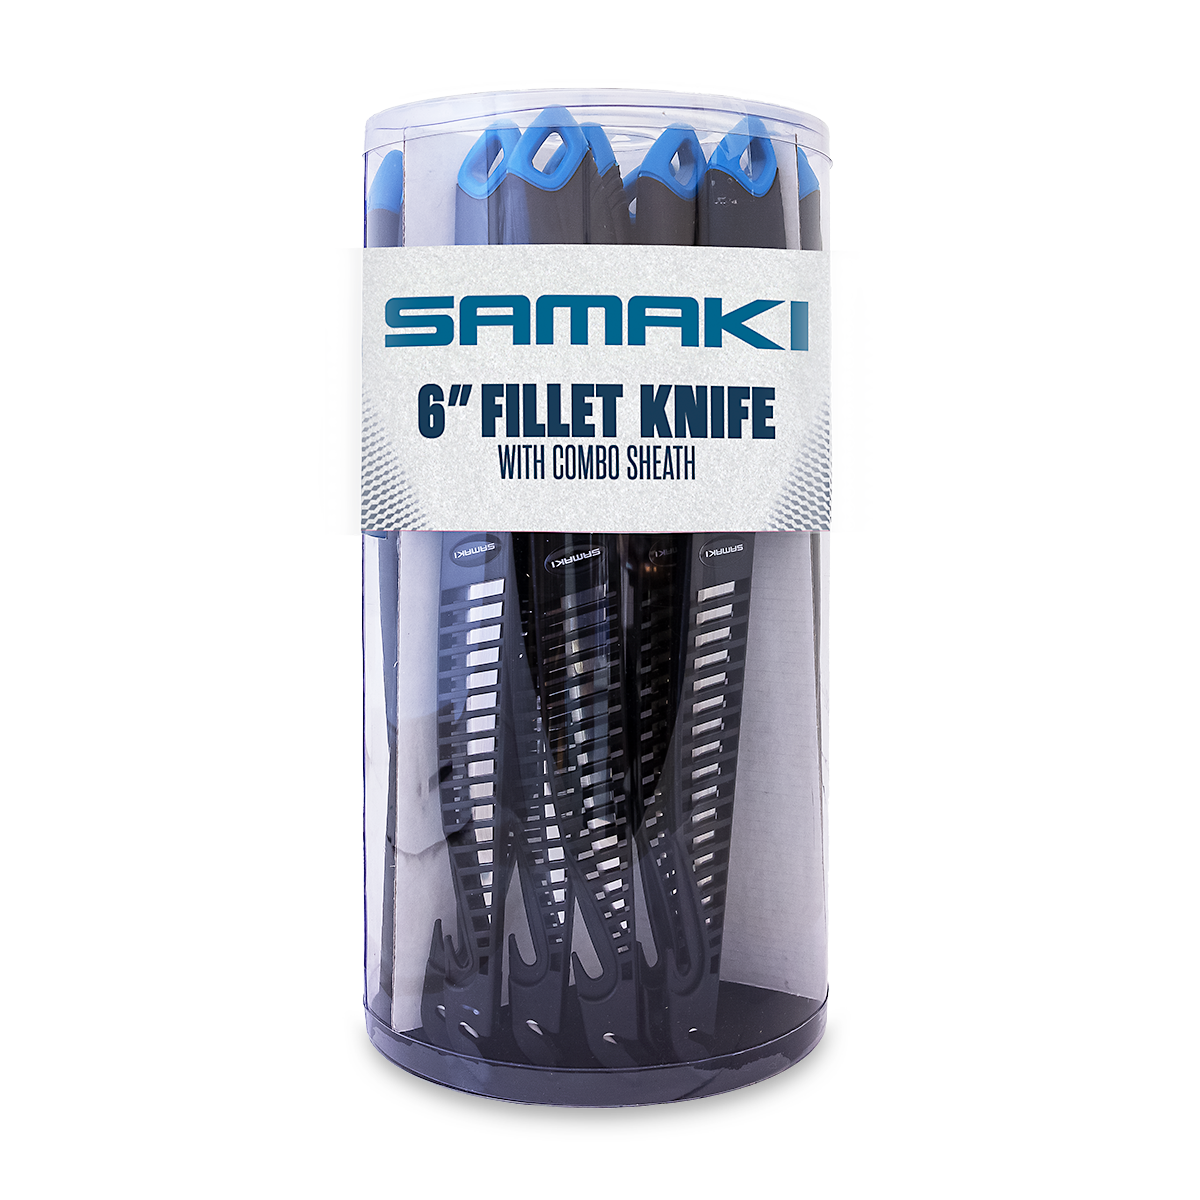 6" Fillet Knife / 24 pieces